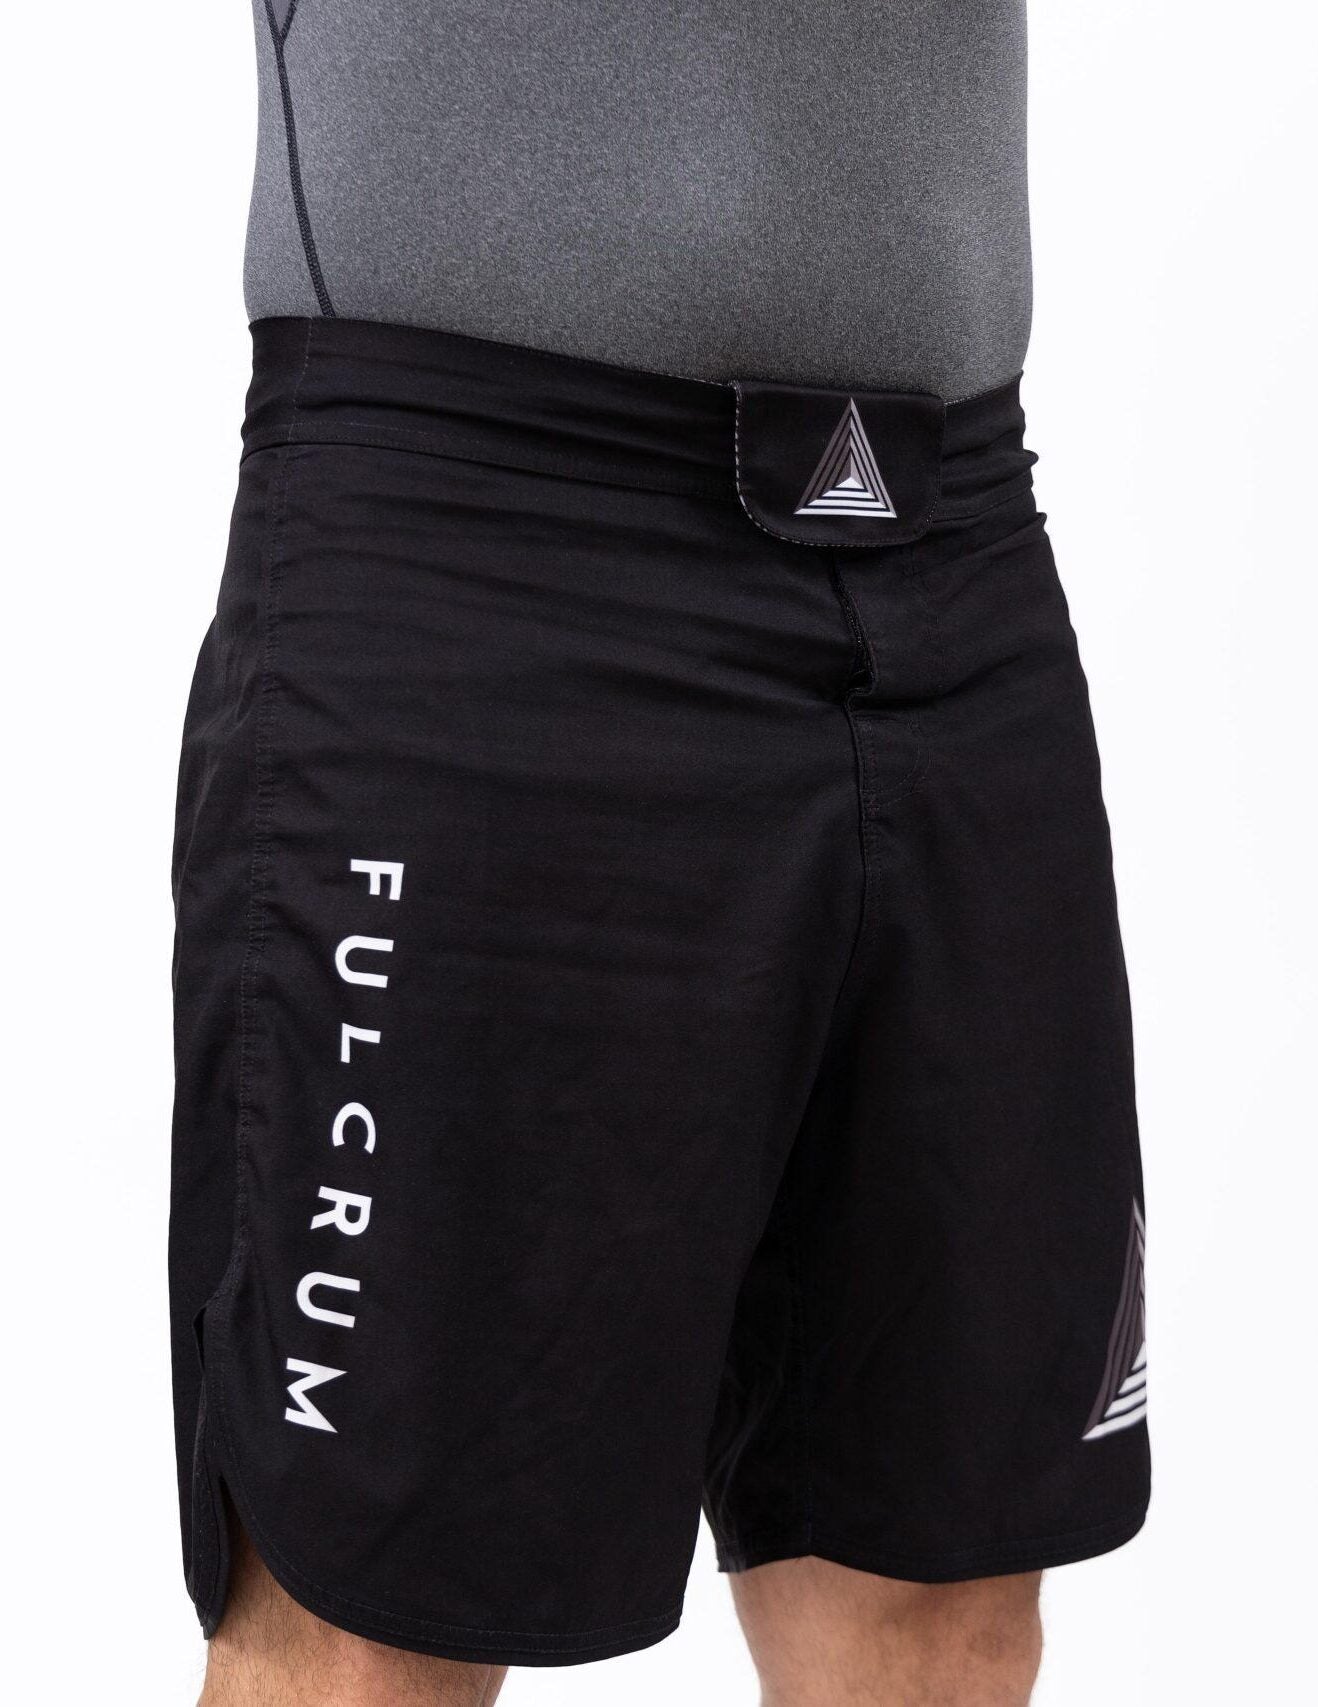 FULCRUM MMA Shorts Men's - Graffiti Grey - Fight Kit